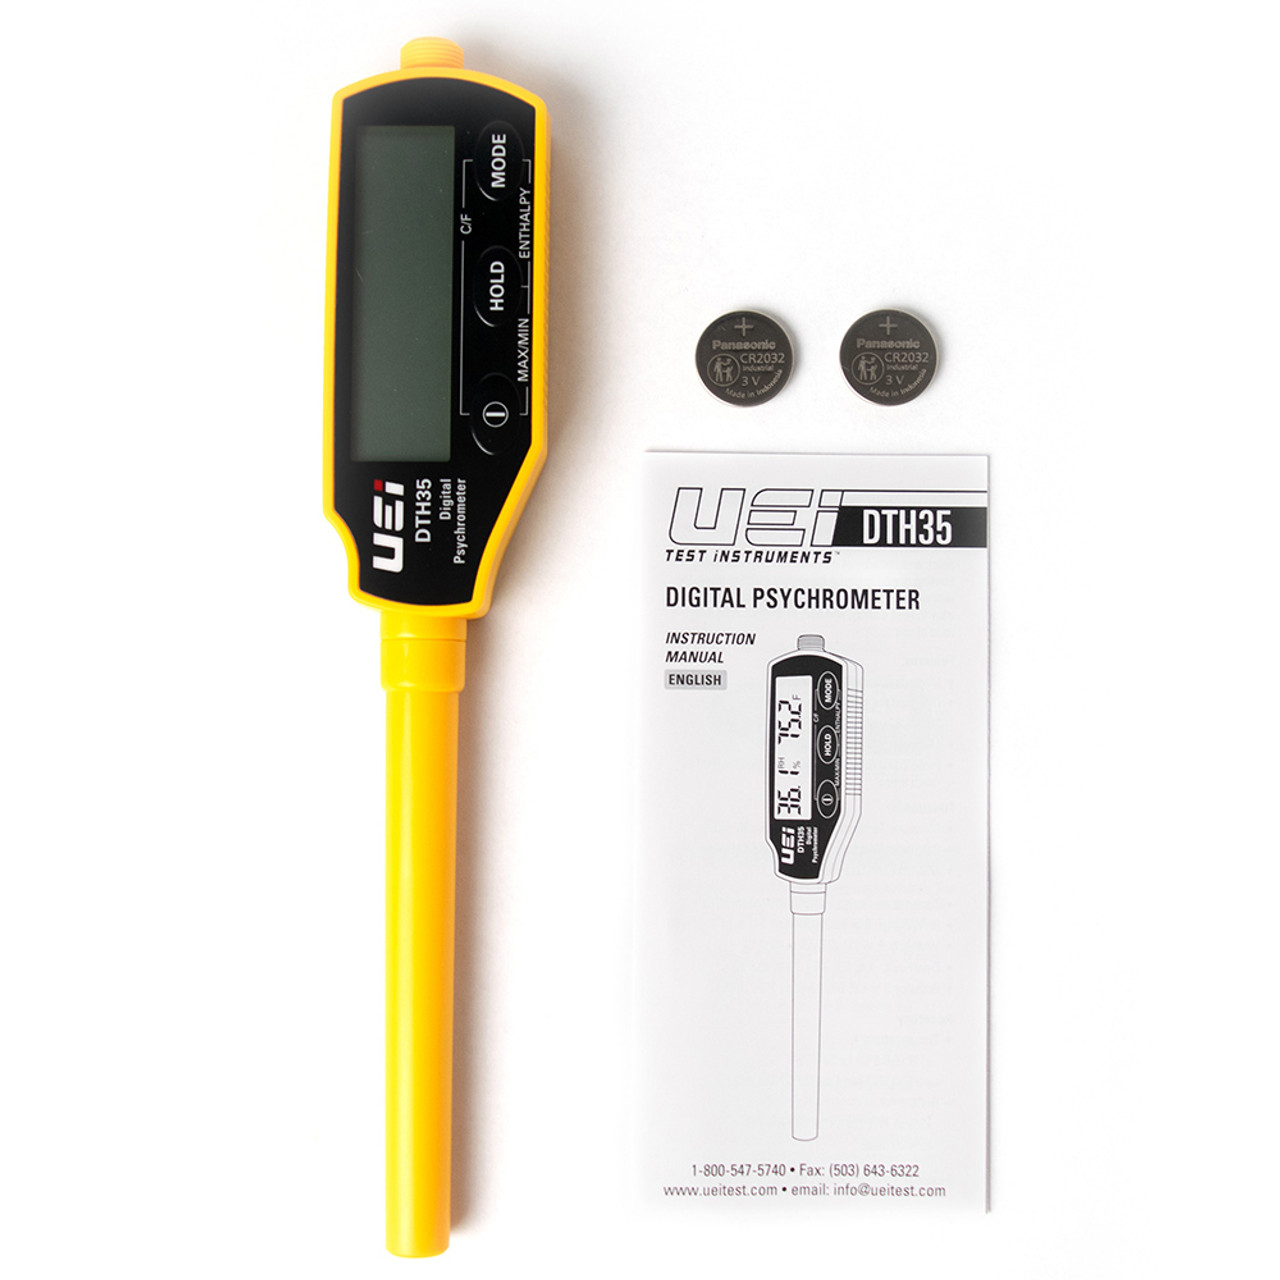 Uei PDT550 Digital Pocket Thermometer